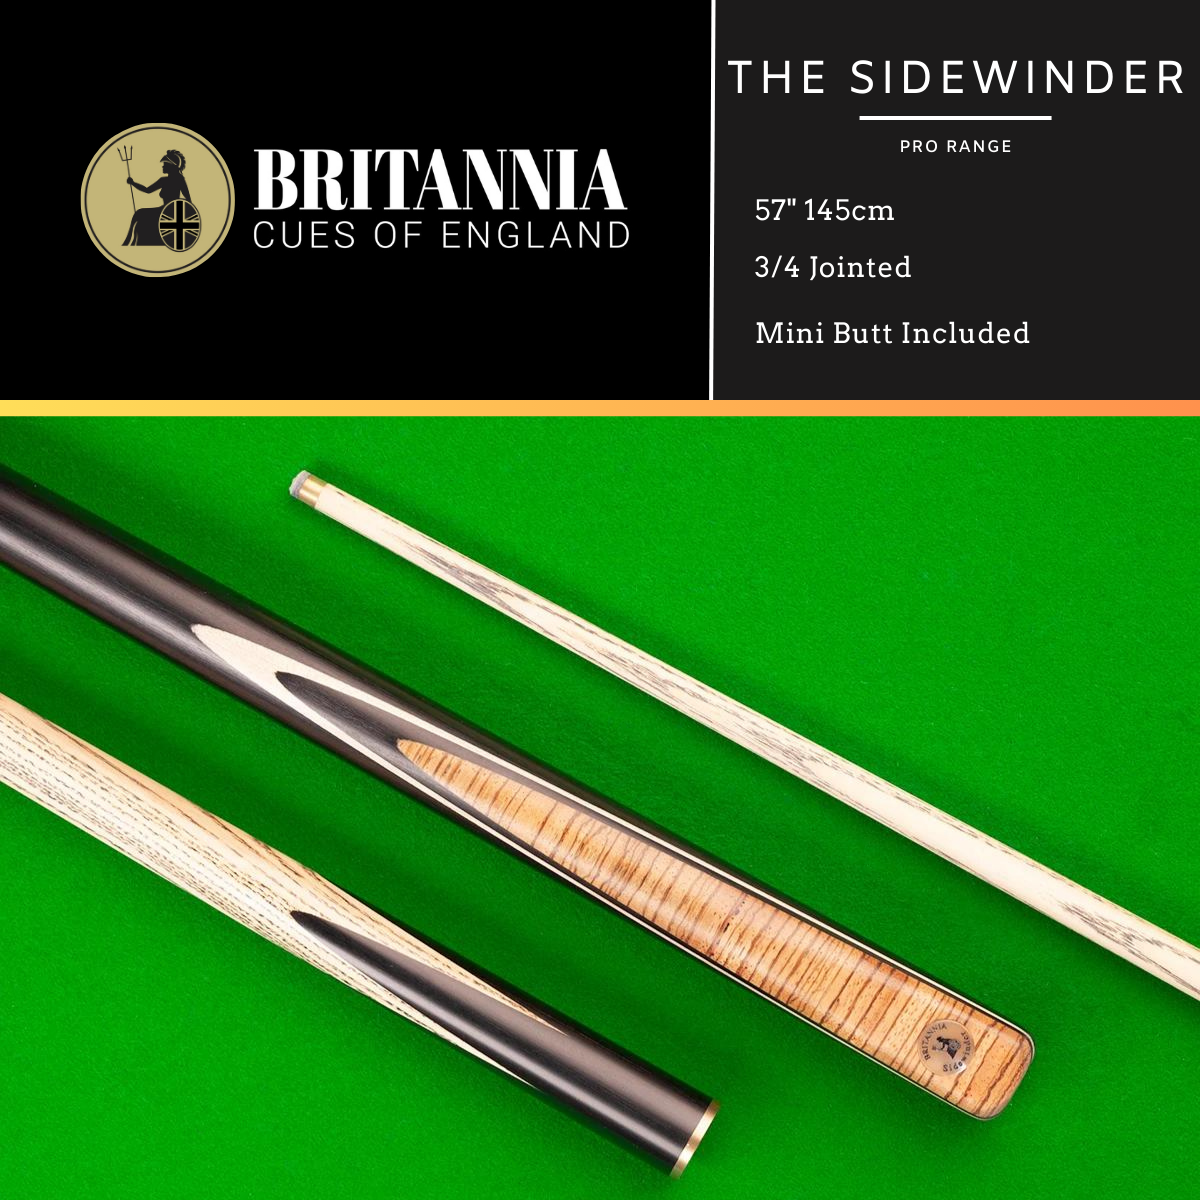 Britannia 3/4 Jointed Sidewinder Pro Range British Pool Cue